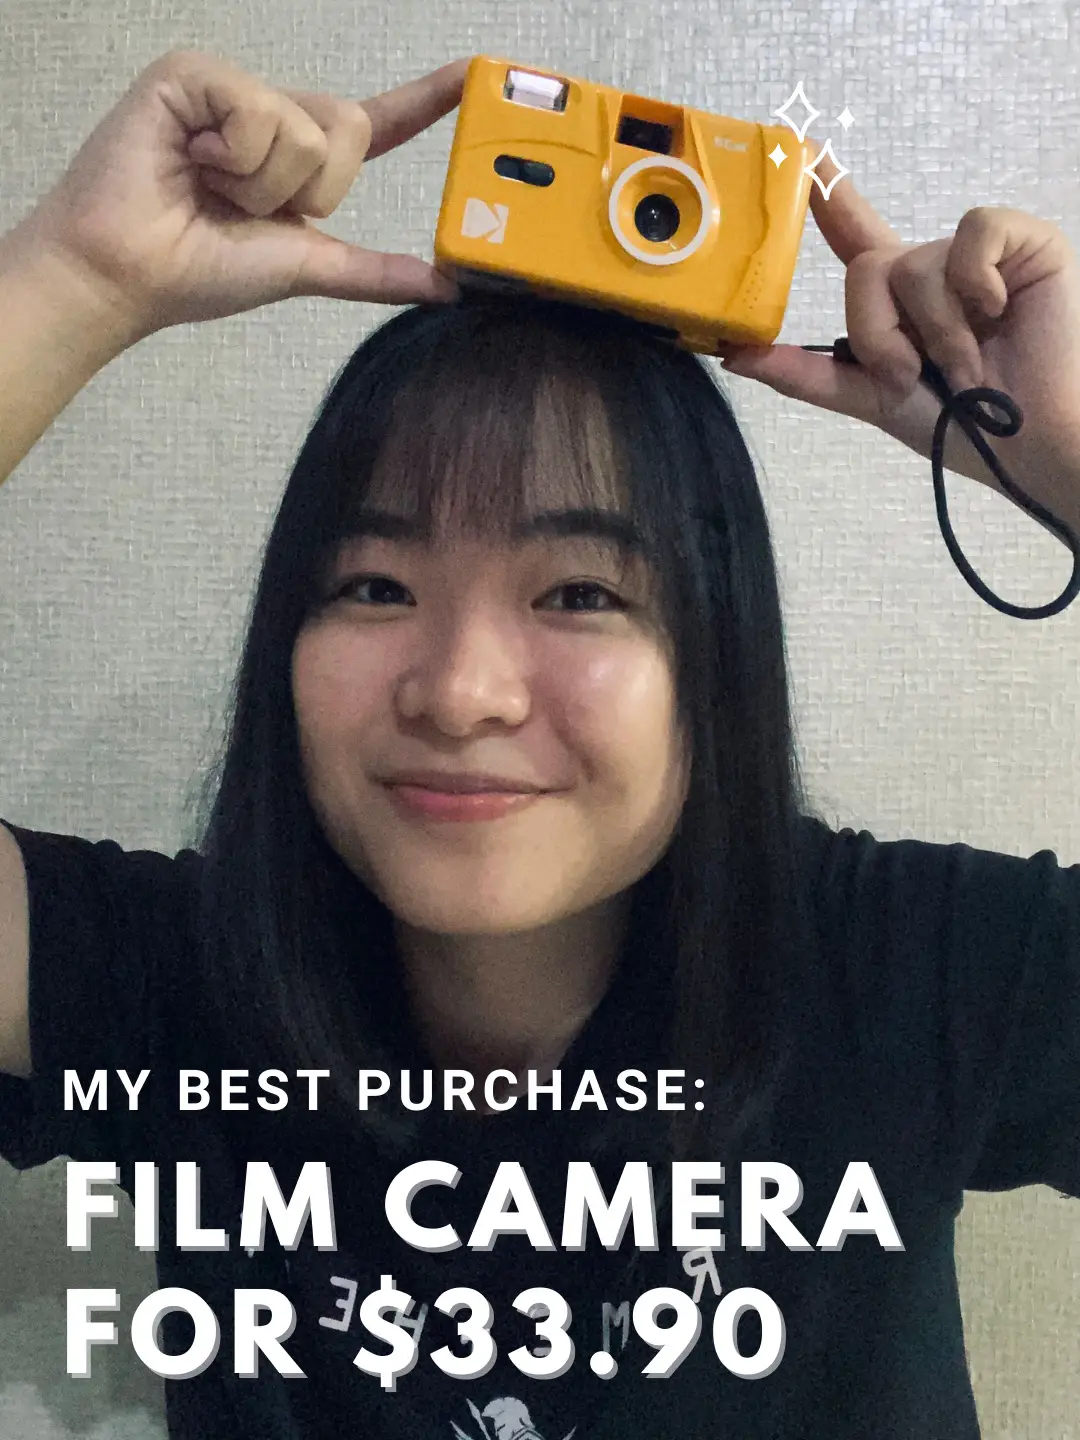  Kodak i60 Reusable 35mm Film Camera - Retro Style, Focus Free,  Built in Flash, Press and Pop-up Flash (Yellow) : Electronics